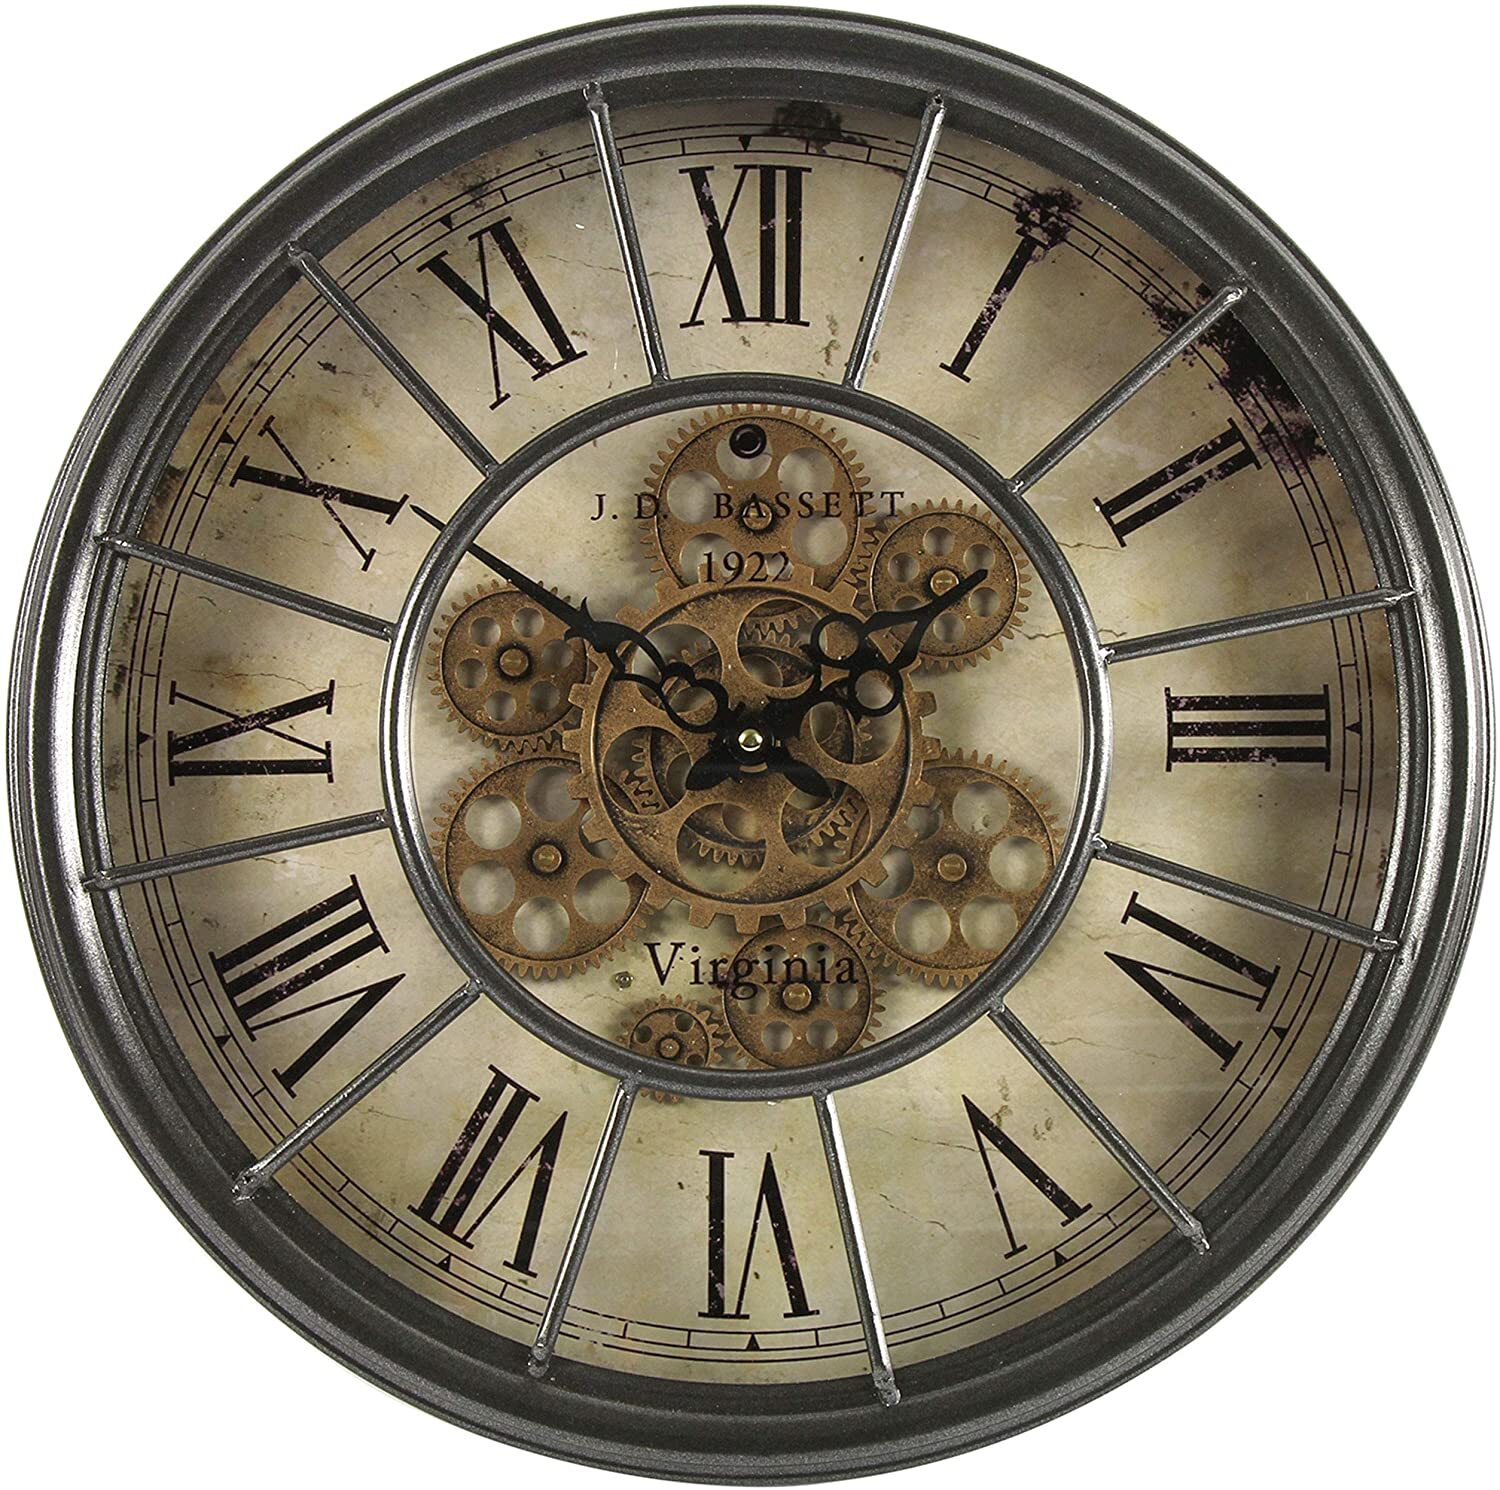 46 5cm Grey Wall Clock With Moving Gears By Countryfield Clocks - Nautical Wall Clocks Australia